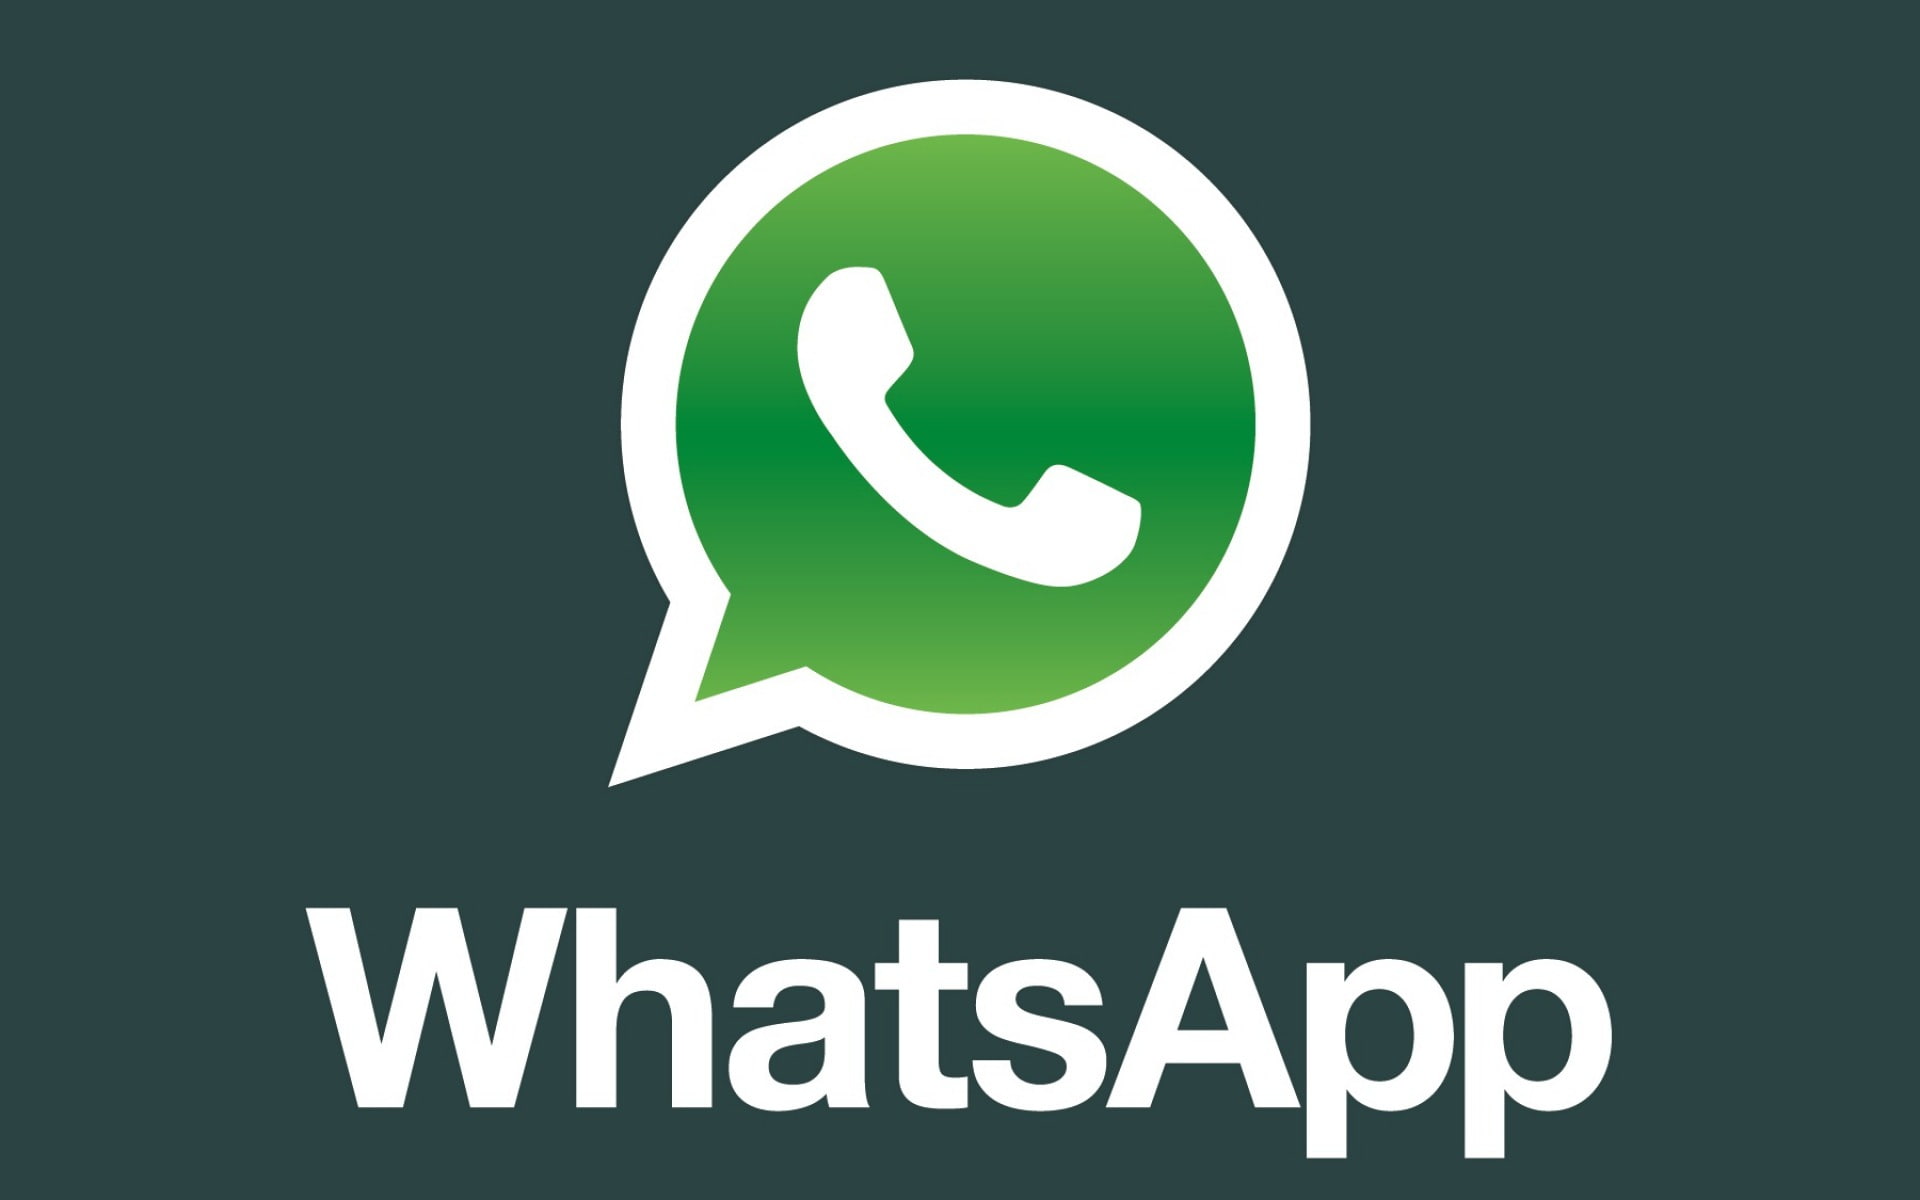 WhatsApp logo background new